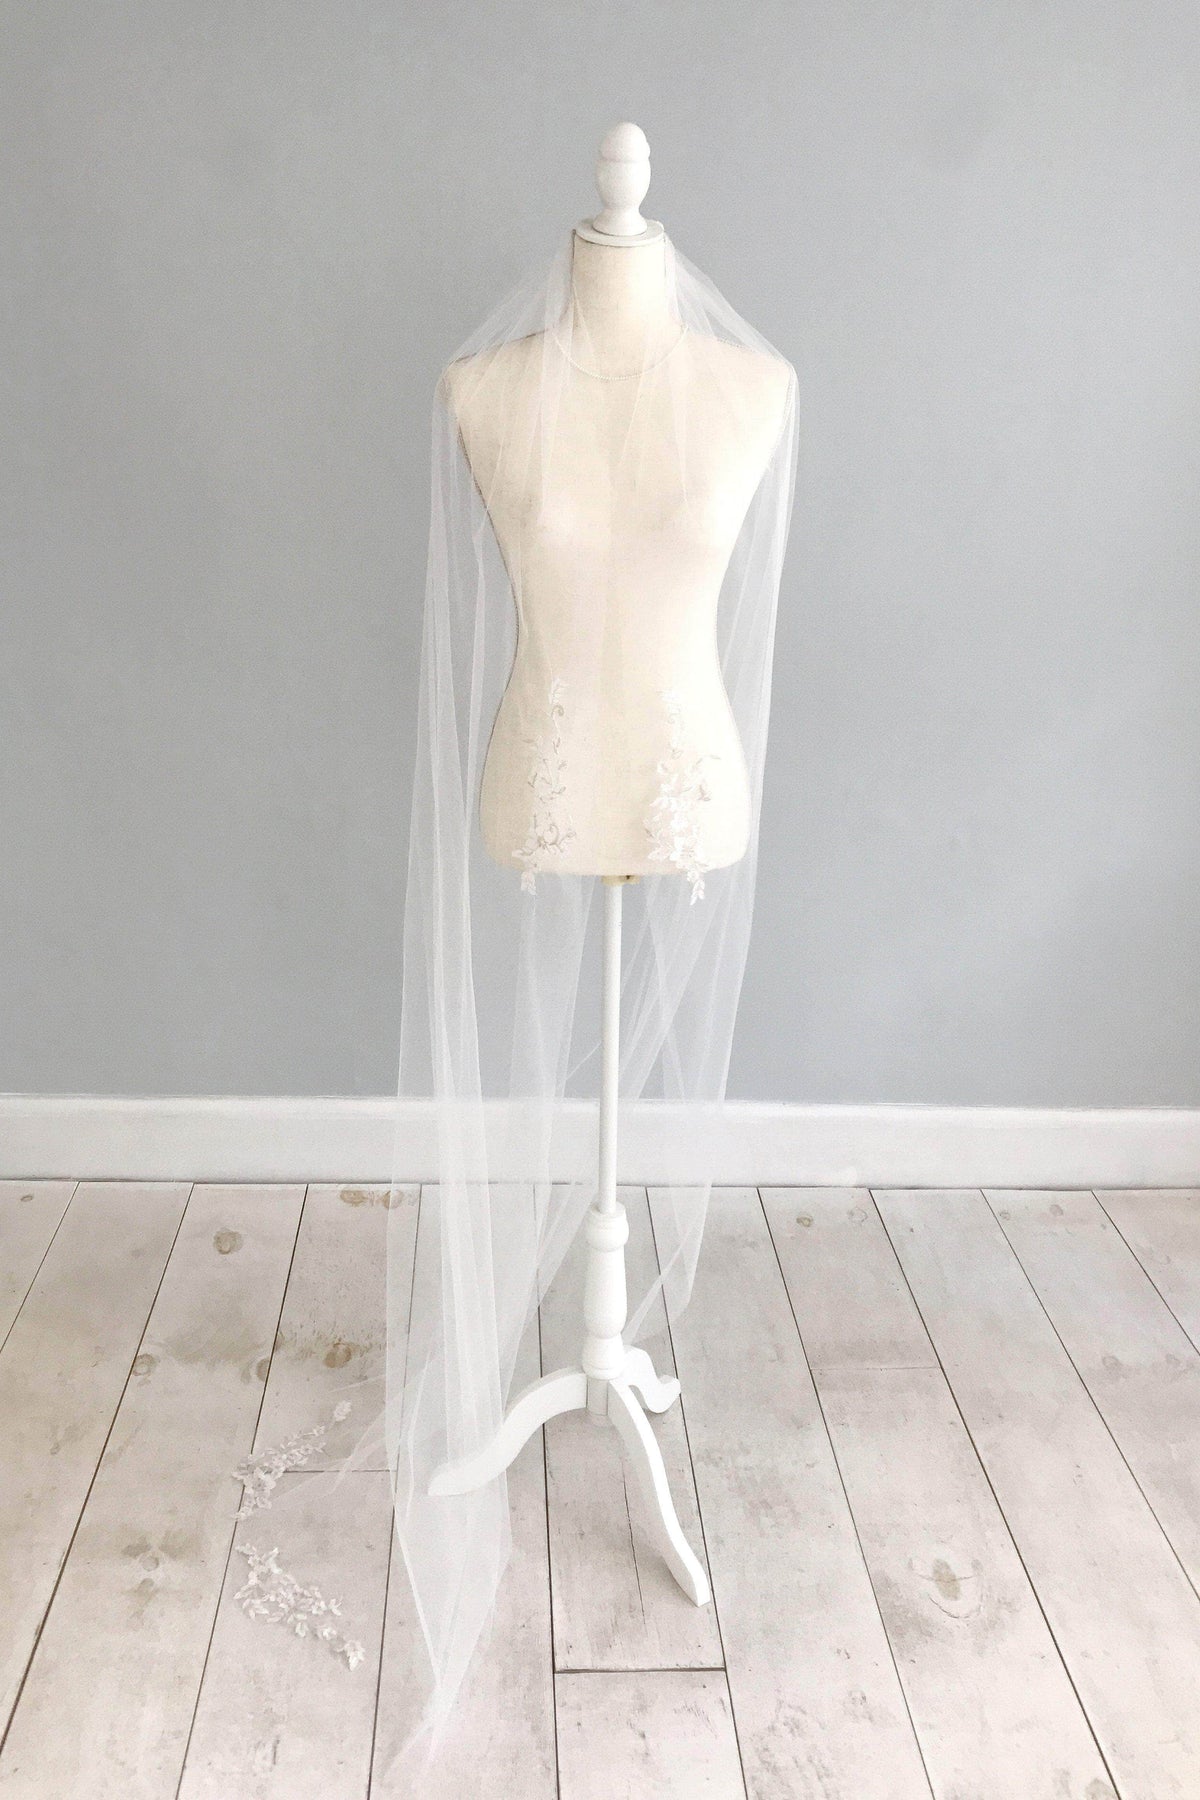 Wedding Veil Lace flower motif wedding veil - &#39;Paisley&#39;